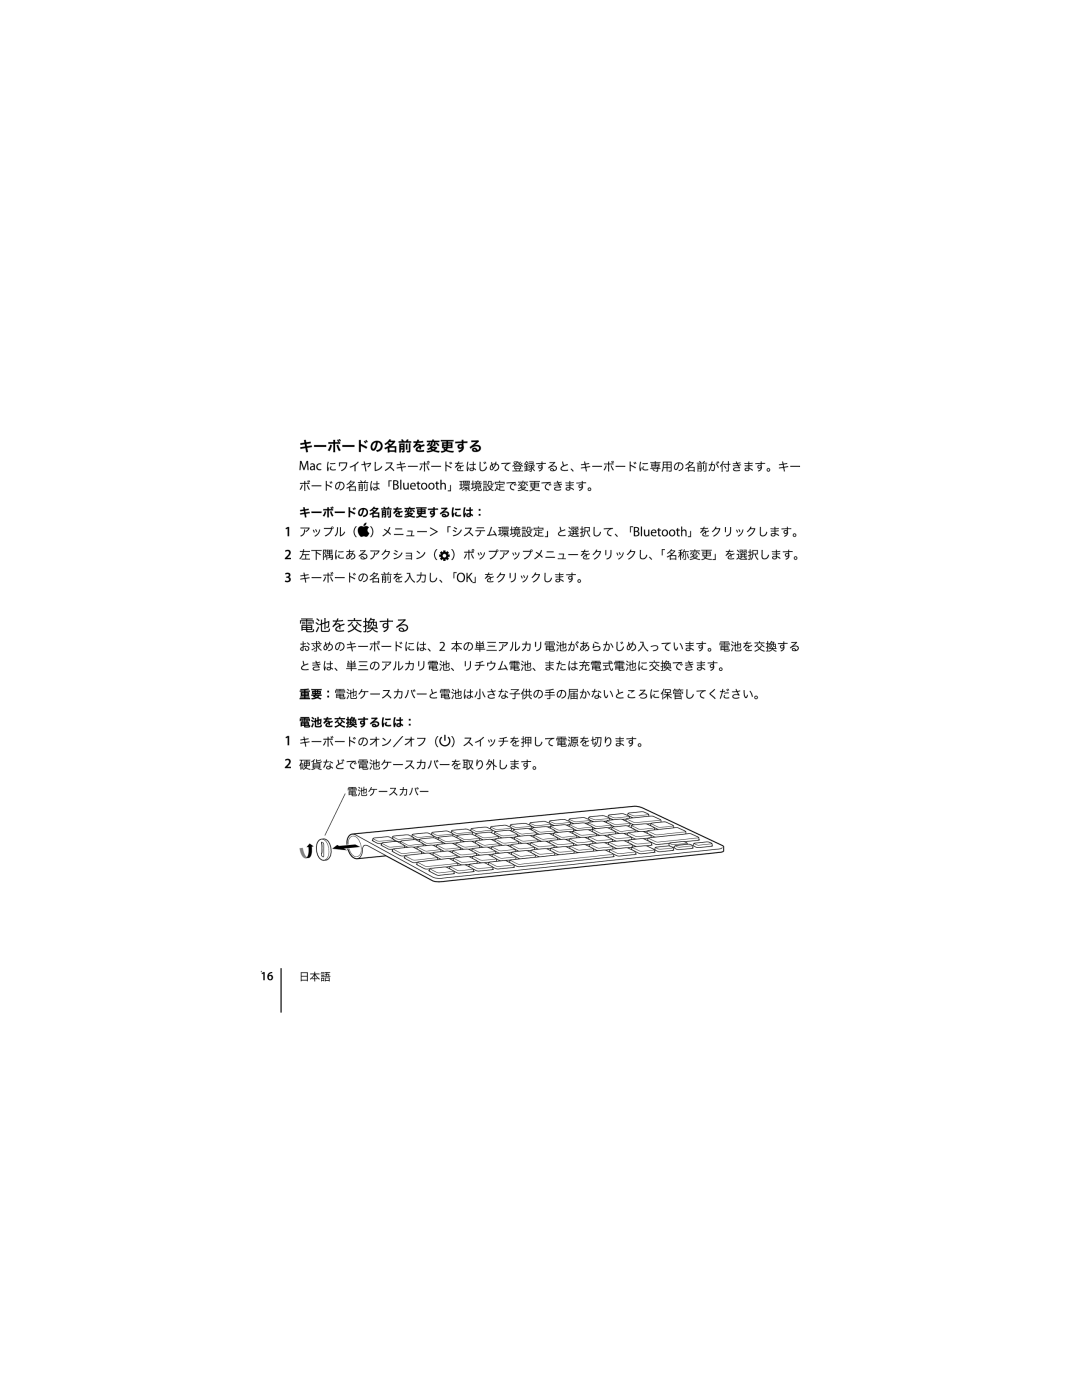 Apple MC184LL/B, 1Z034-4954-A manual Japanese 